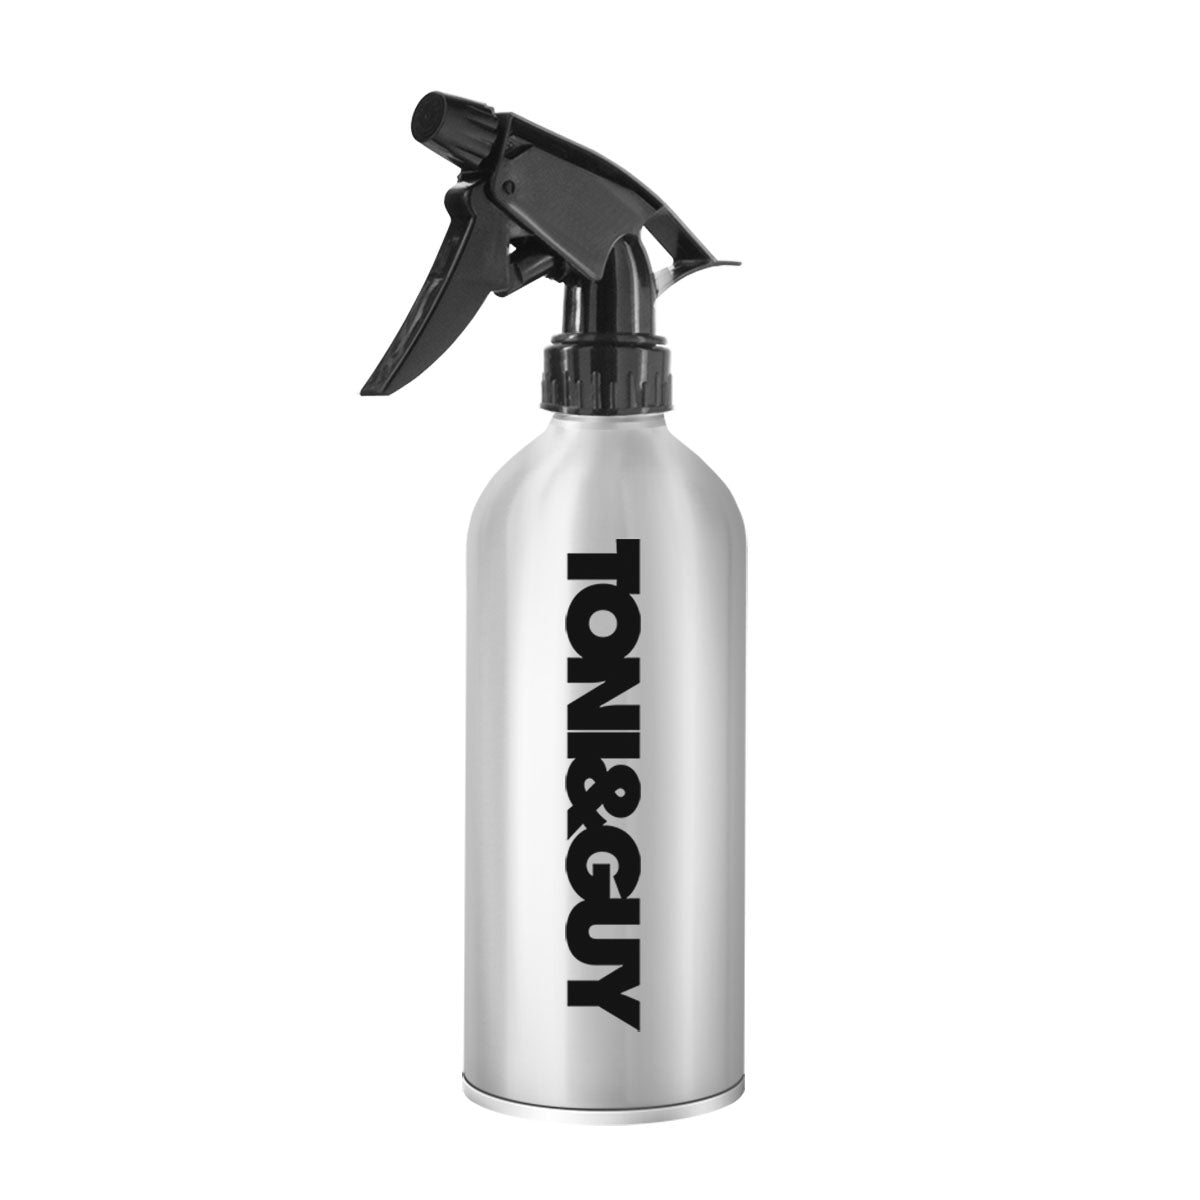 ACTIVESHOP Aluminum sprayer for hairdressing 200ml